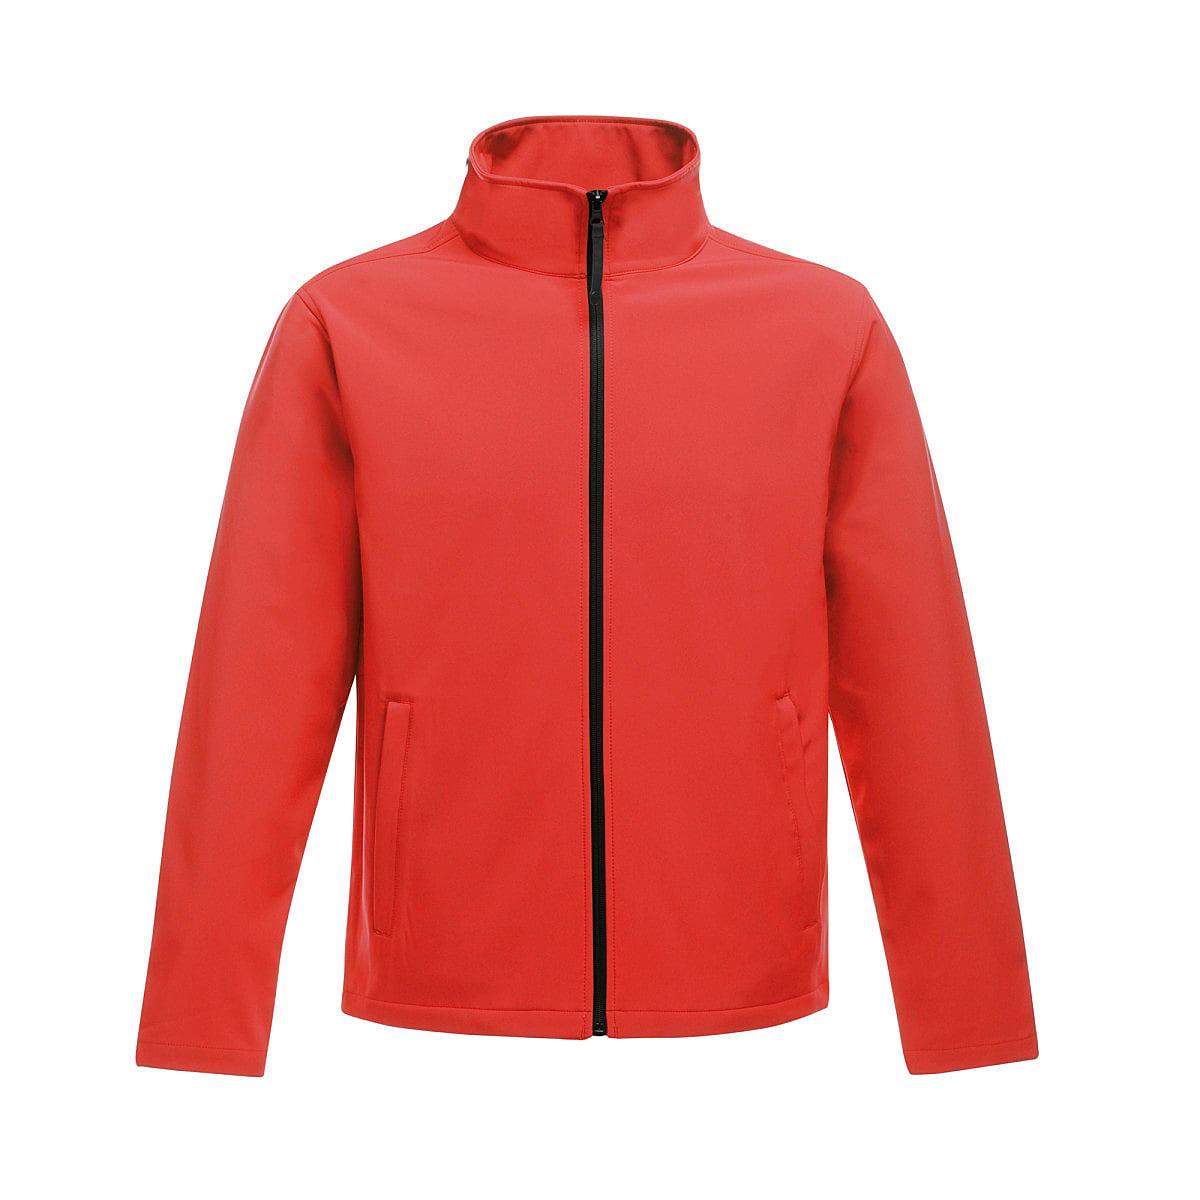 Regatta Women Ablaze Softshell Jacket in Classic Red / Black (Product Code: TRA629)